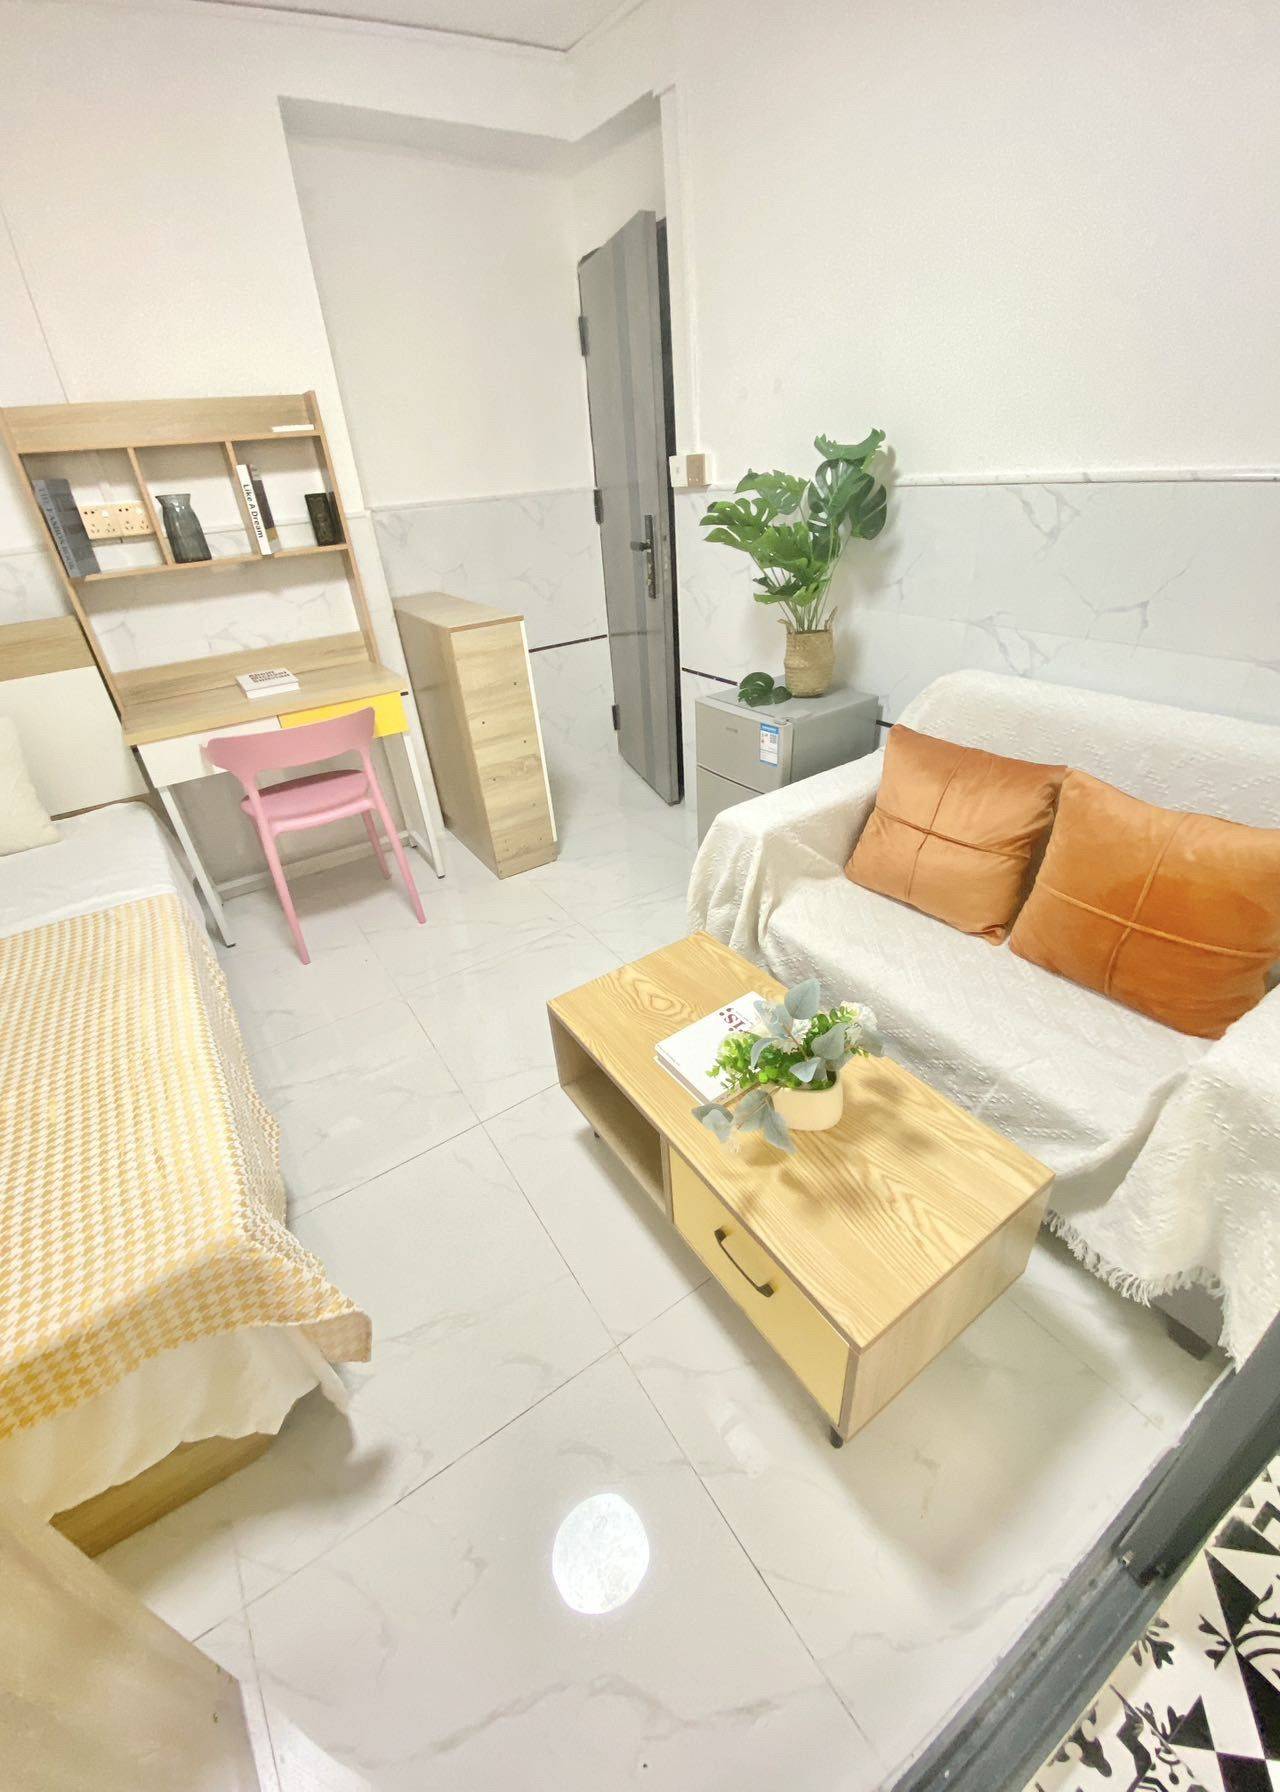 Shenzhen-Nanshan-Cozy Home,Clean&Comfy,No Gender Limit,Hustle & Bustle,“Friends”